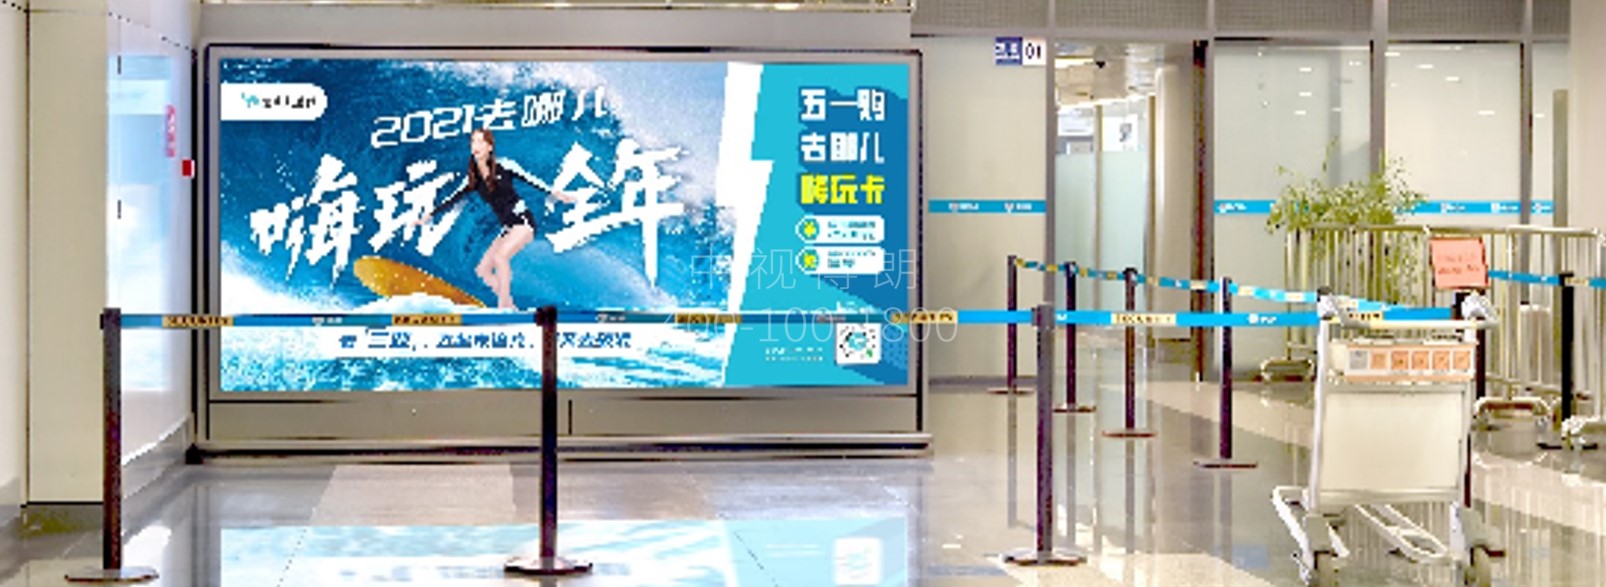 北京首都机场广告-T2 Domestic Security Checkpoint Light Box D088